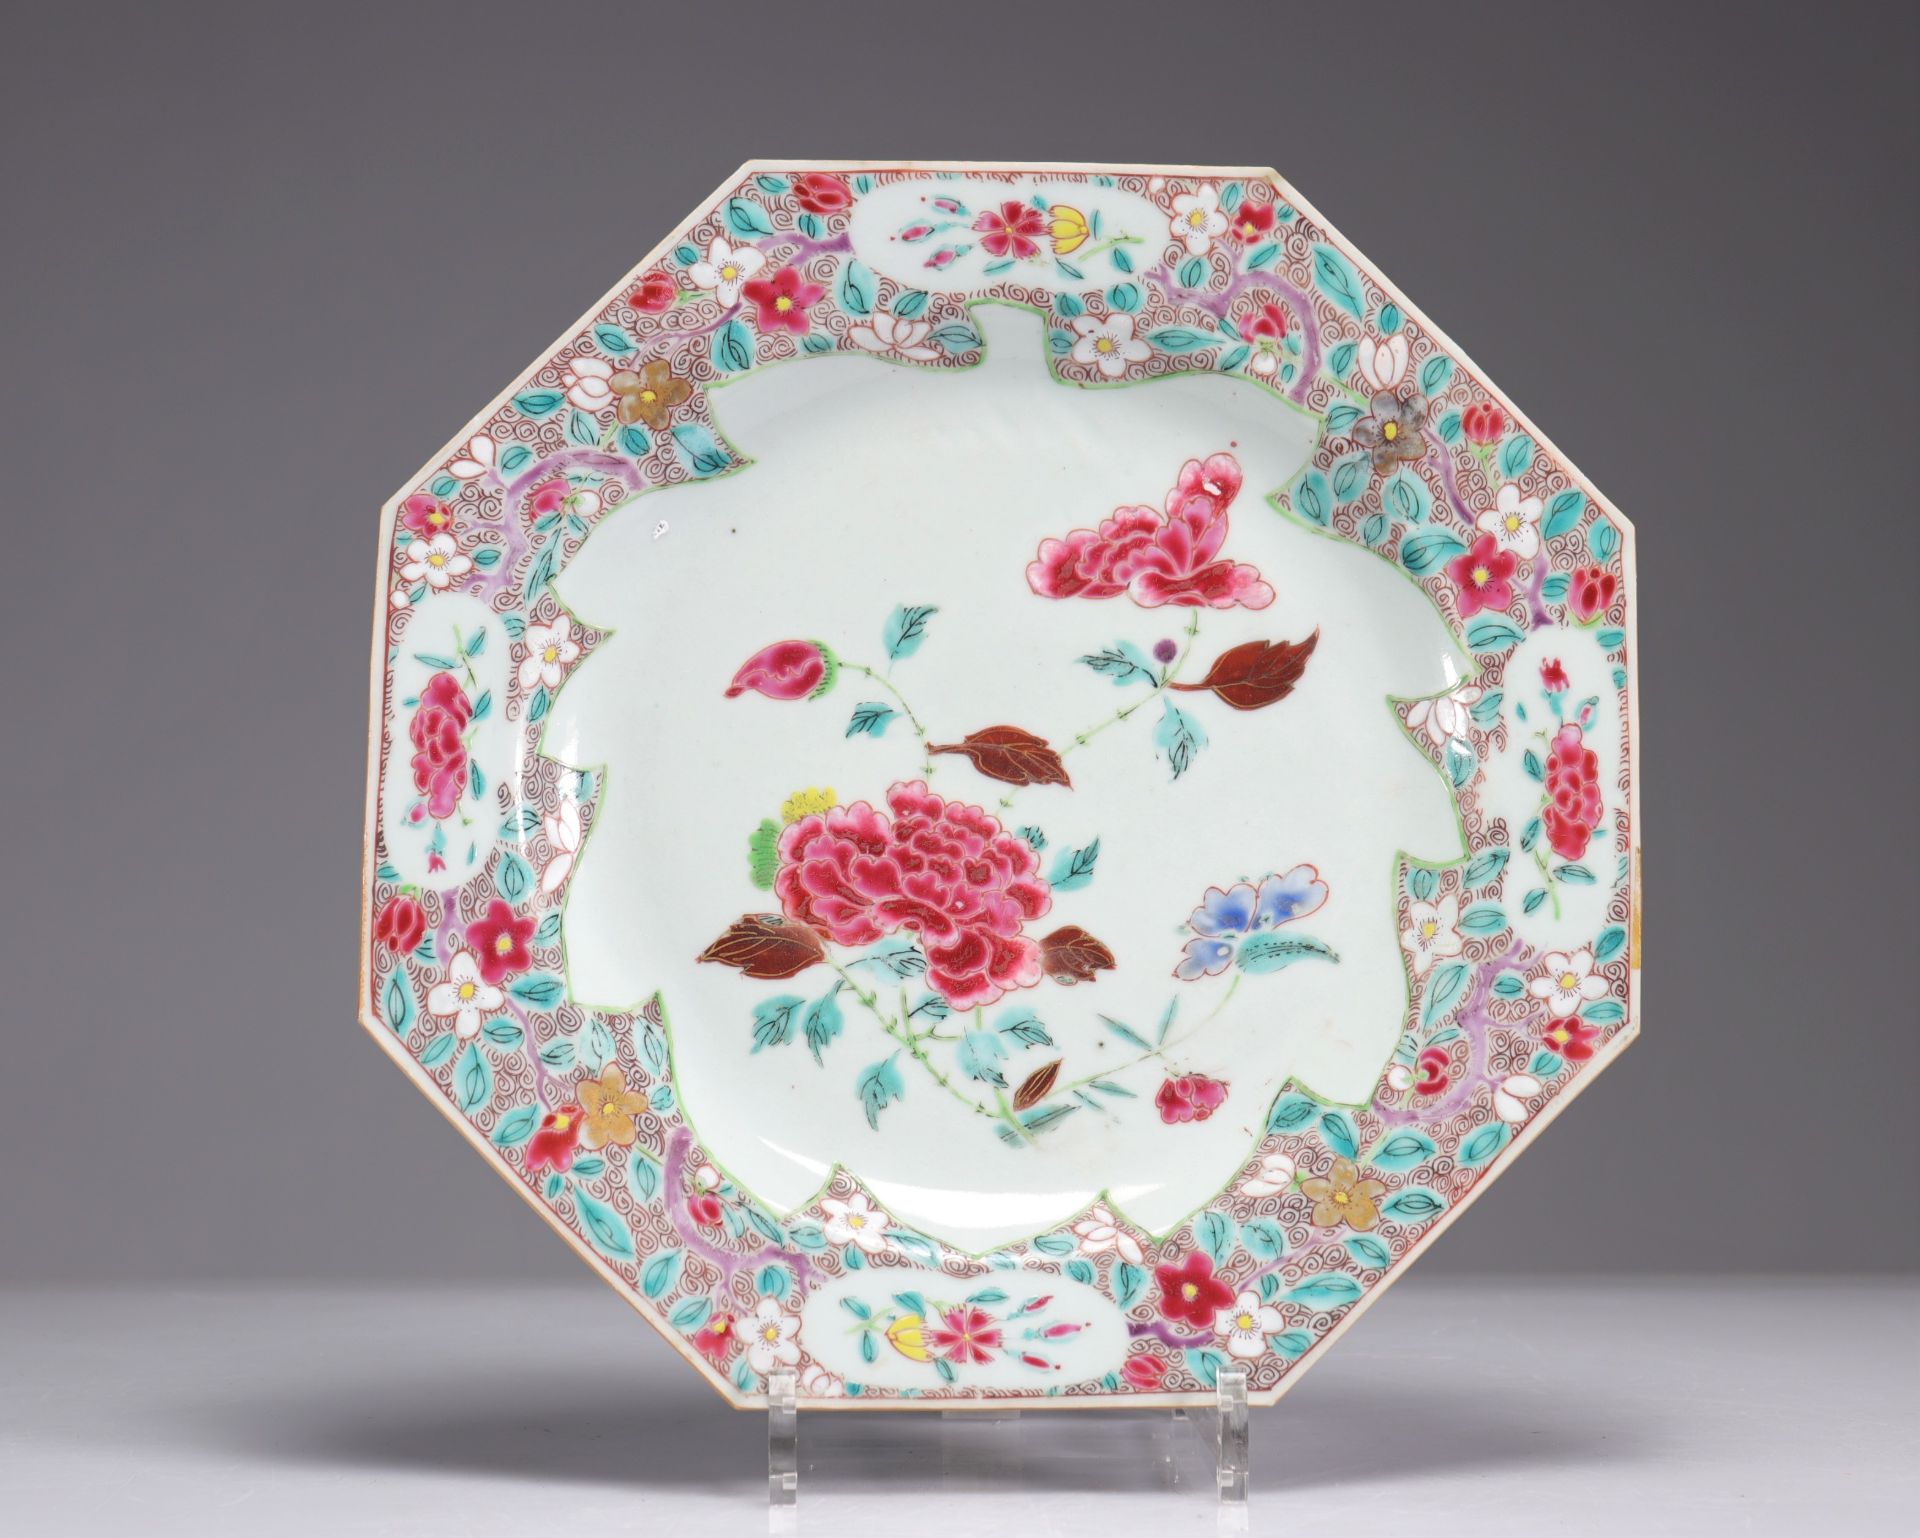 18th century famille rose porcelain plates